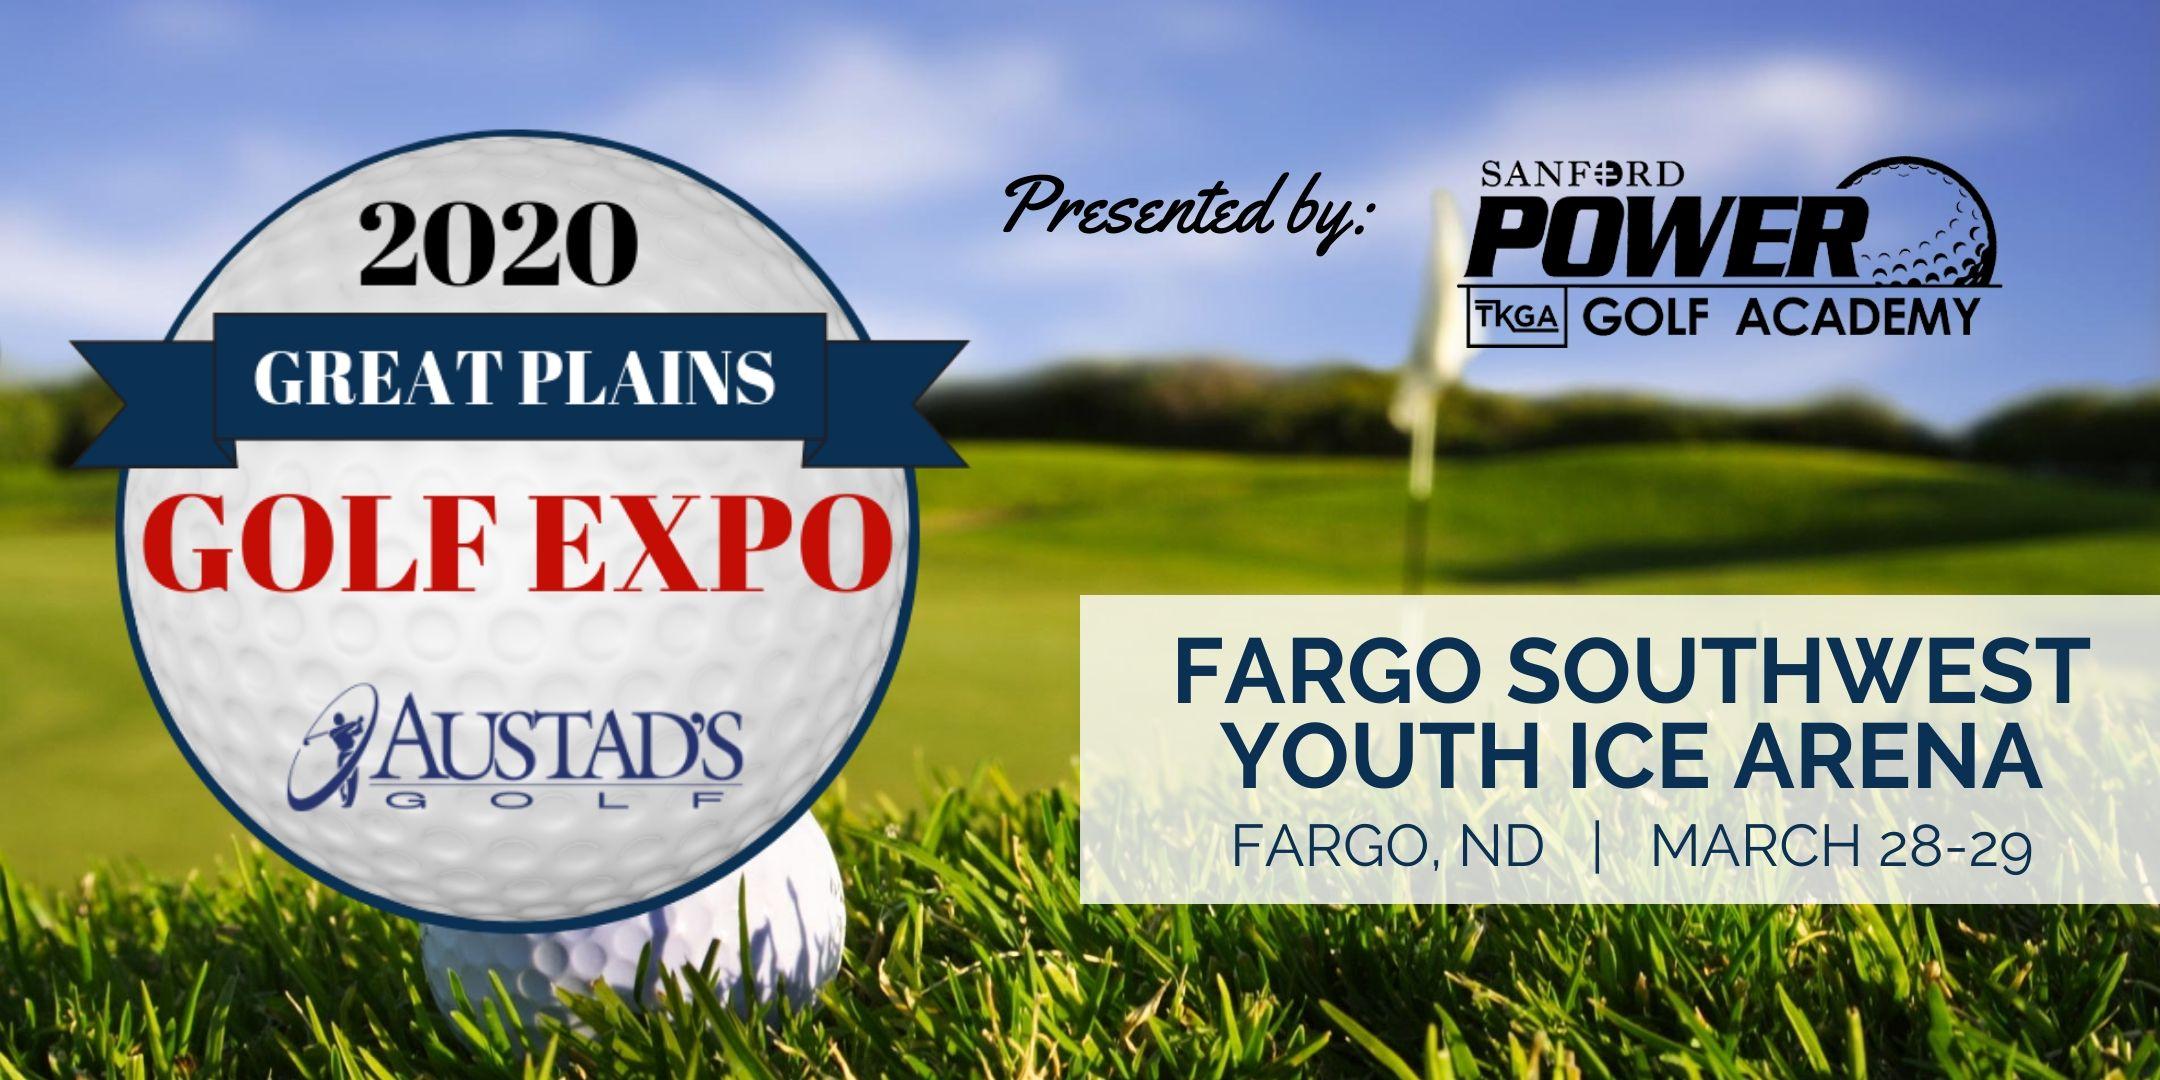 Austad's 2020 Golf Expo Presented by Sanford Power Golf Academy - Fargo